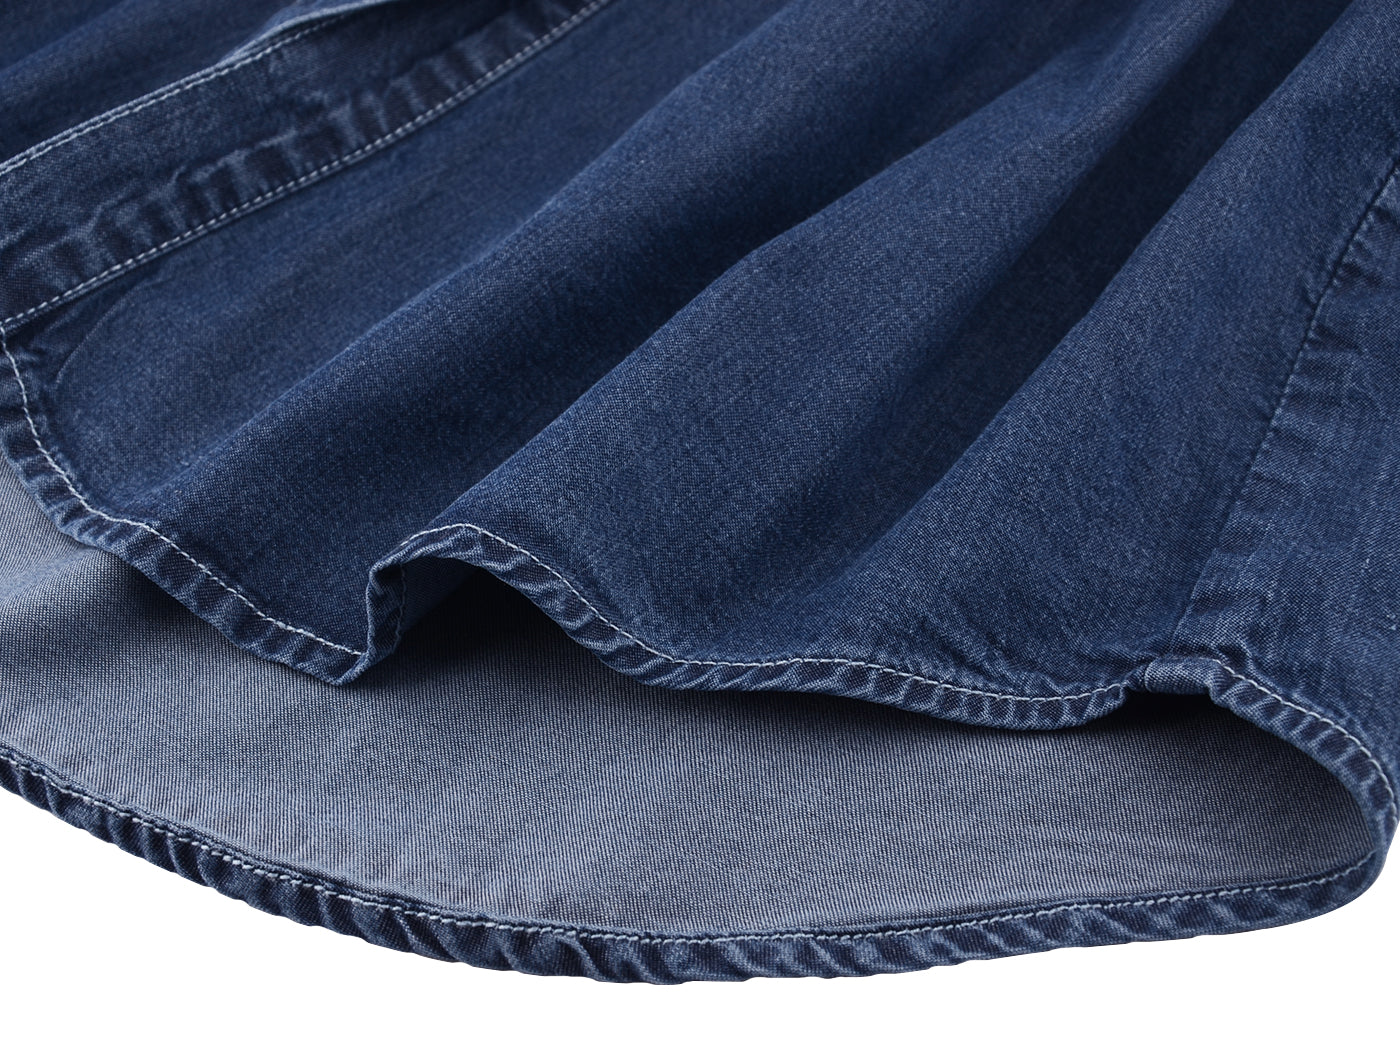 Denim Long-Sleeve Jean Shirt Dress